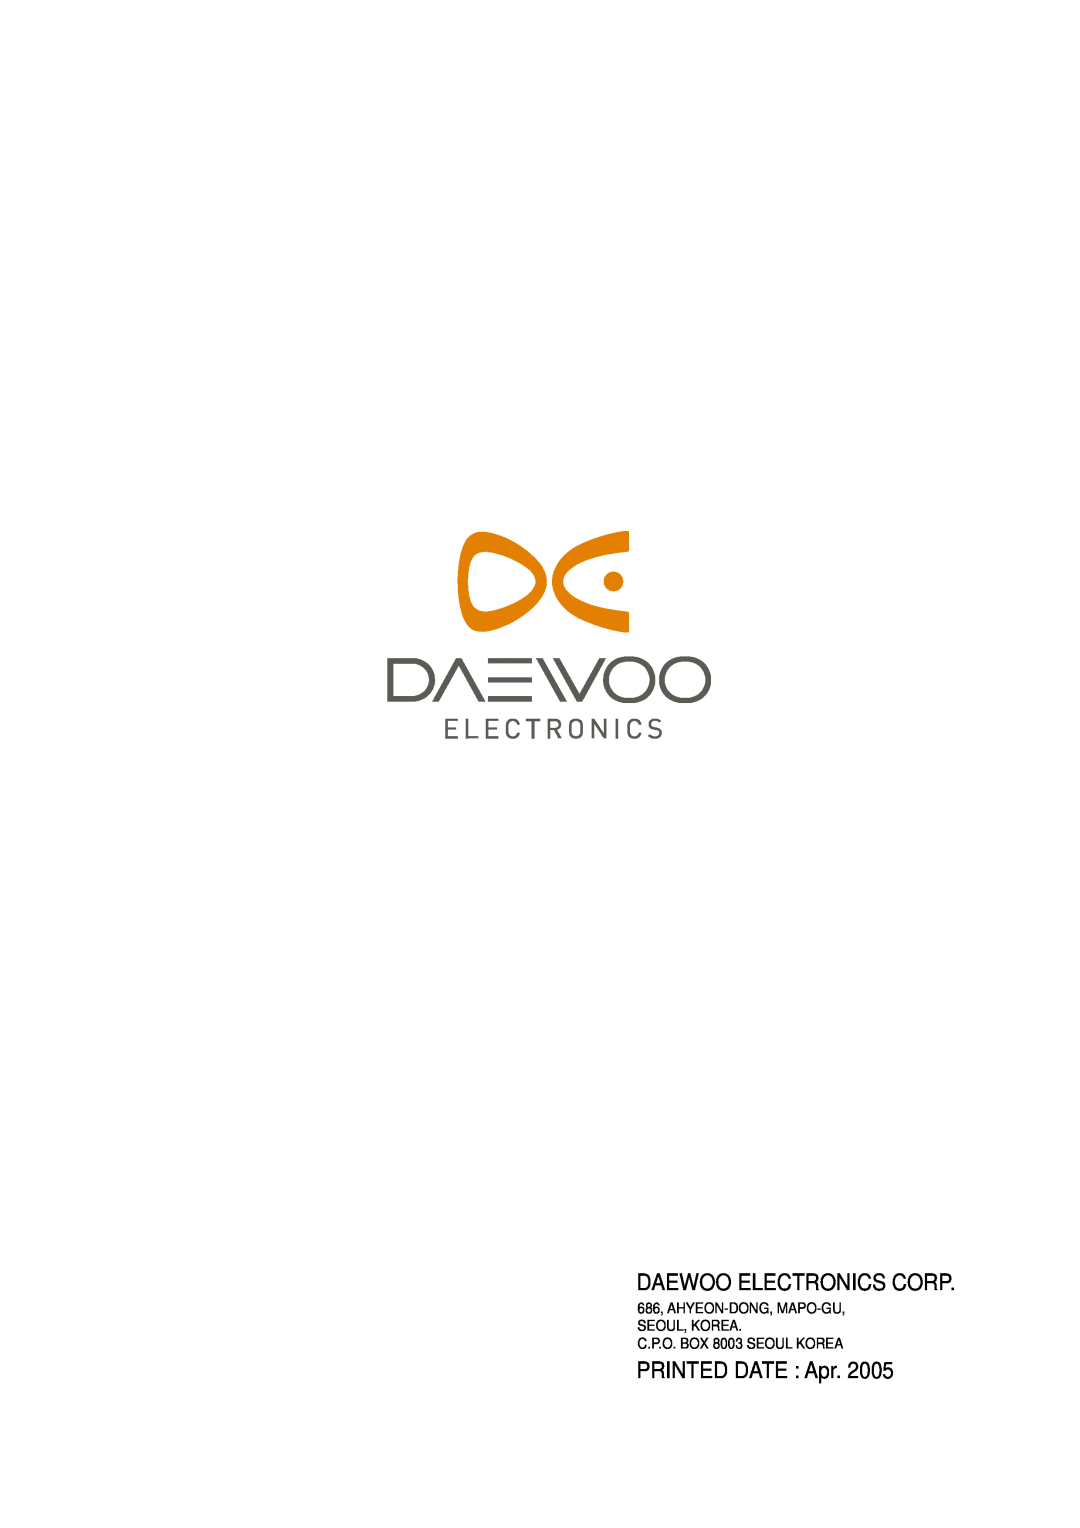 Daewoo DTQ-29U5SSFV, DTQ-29U4SCV, CN-401FN service manual Daewoo Electronics Corp, PRINTED DATE Apr 